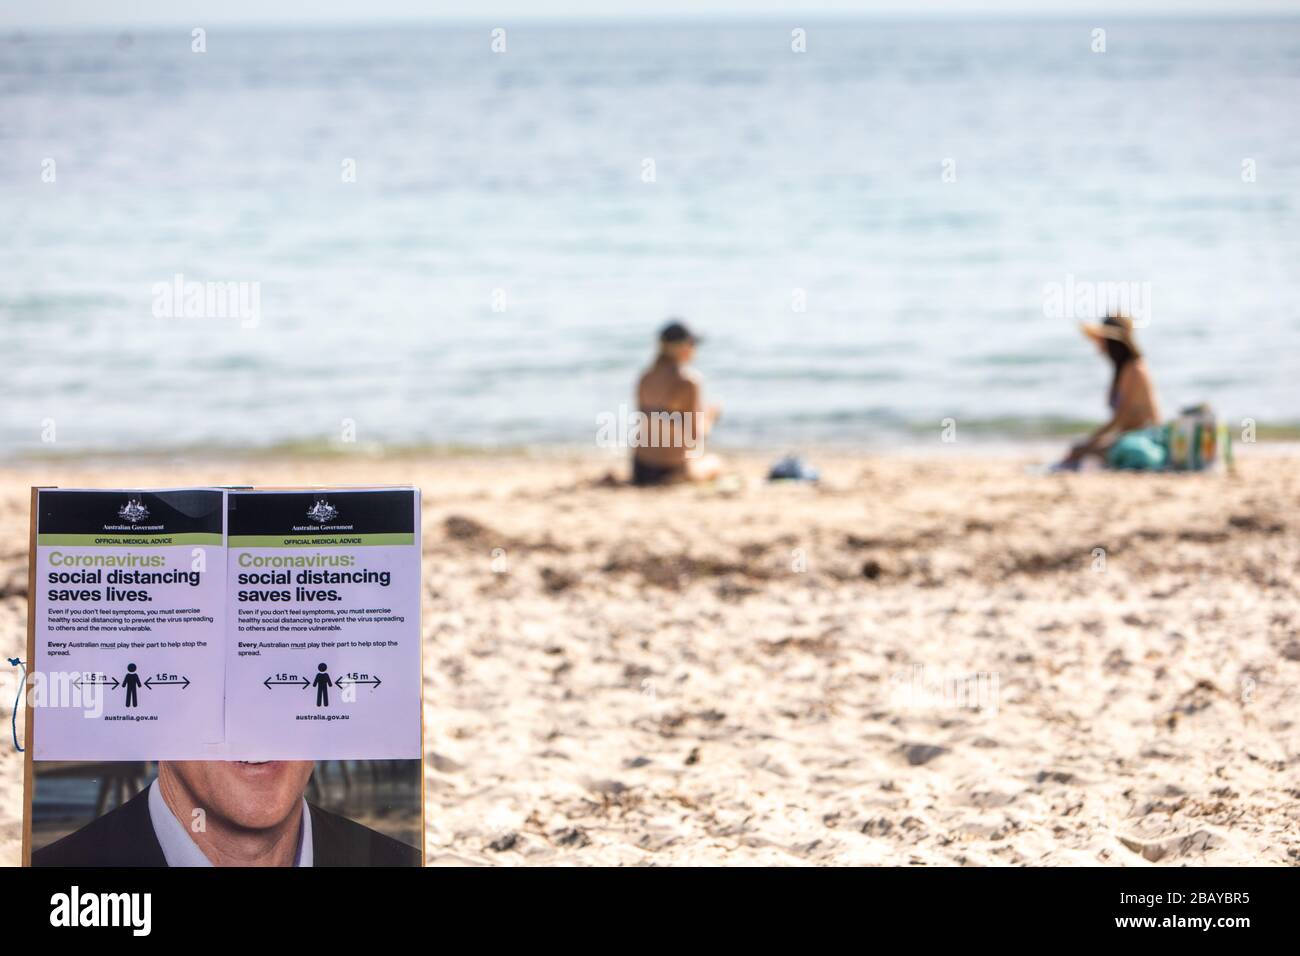 Surf life savers make a public announcement regarding social distancing of 1.5m on Somerton Beach during the Corona Virus Pandemic in Australia. Stock Photo